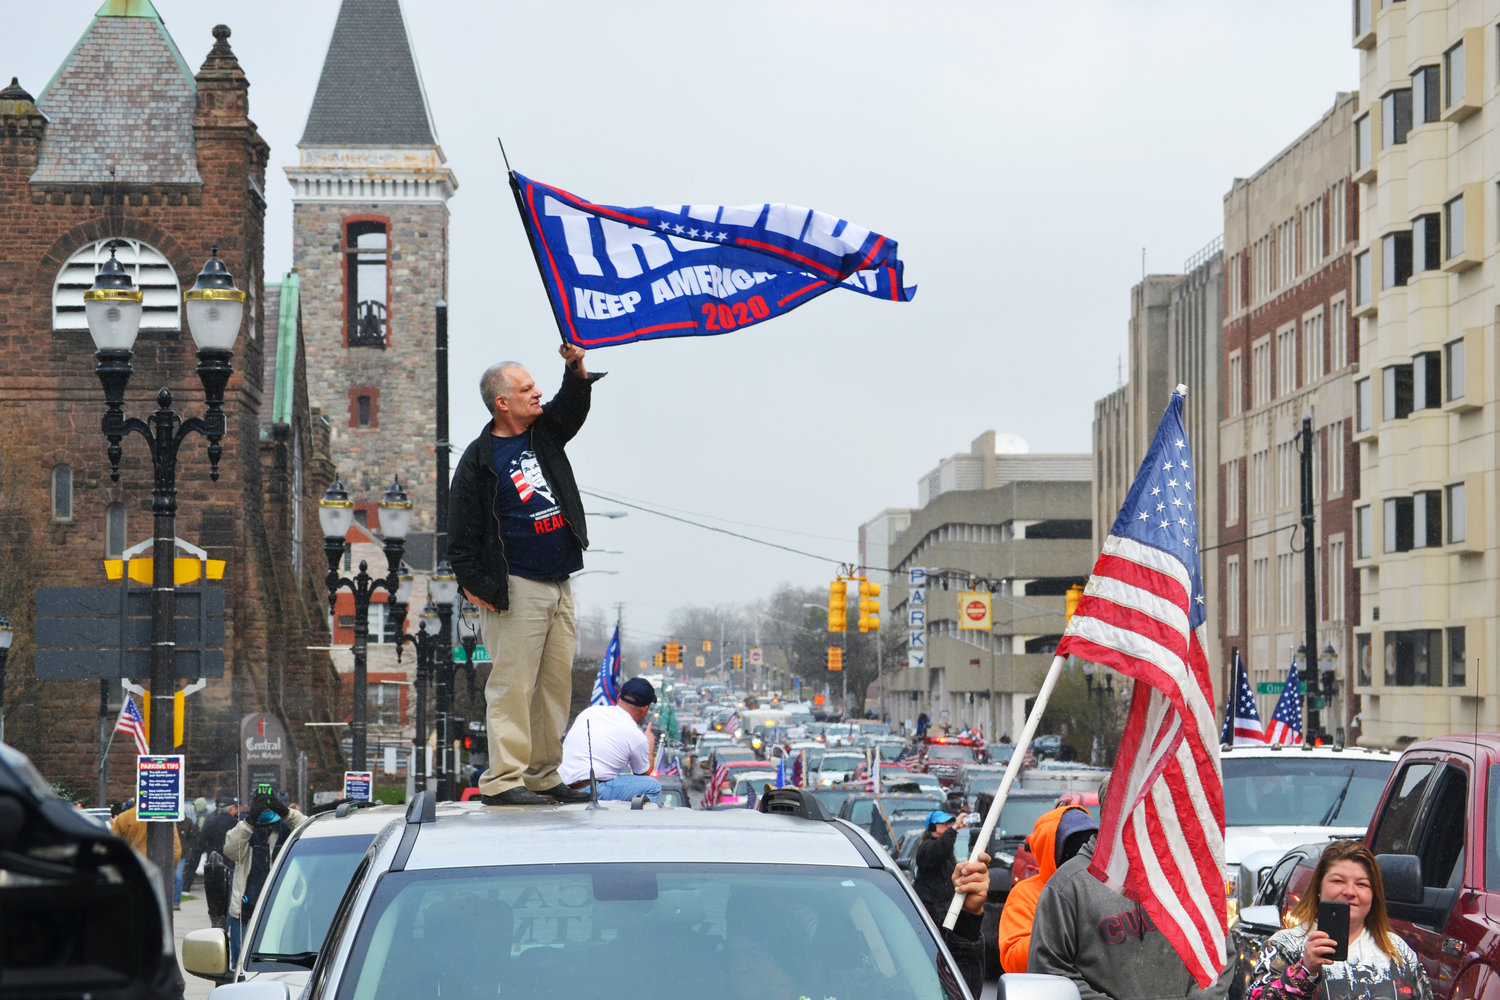 A man waves a Trump flag atop his vehicle.